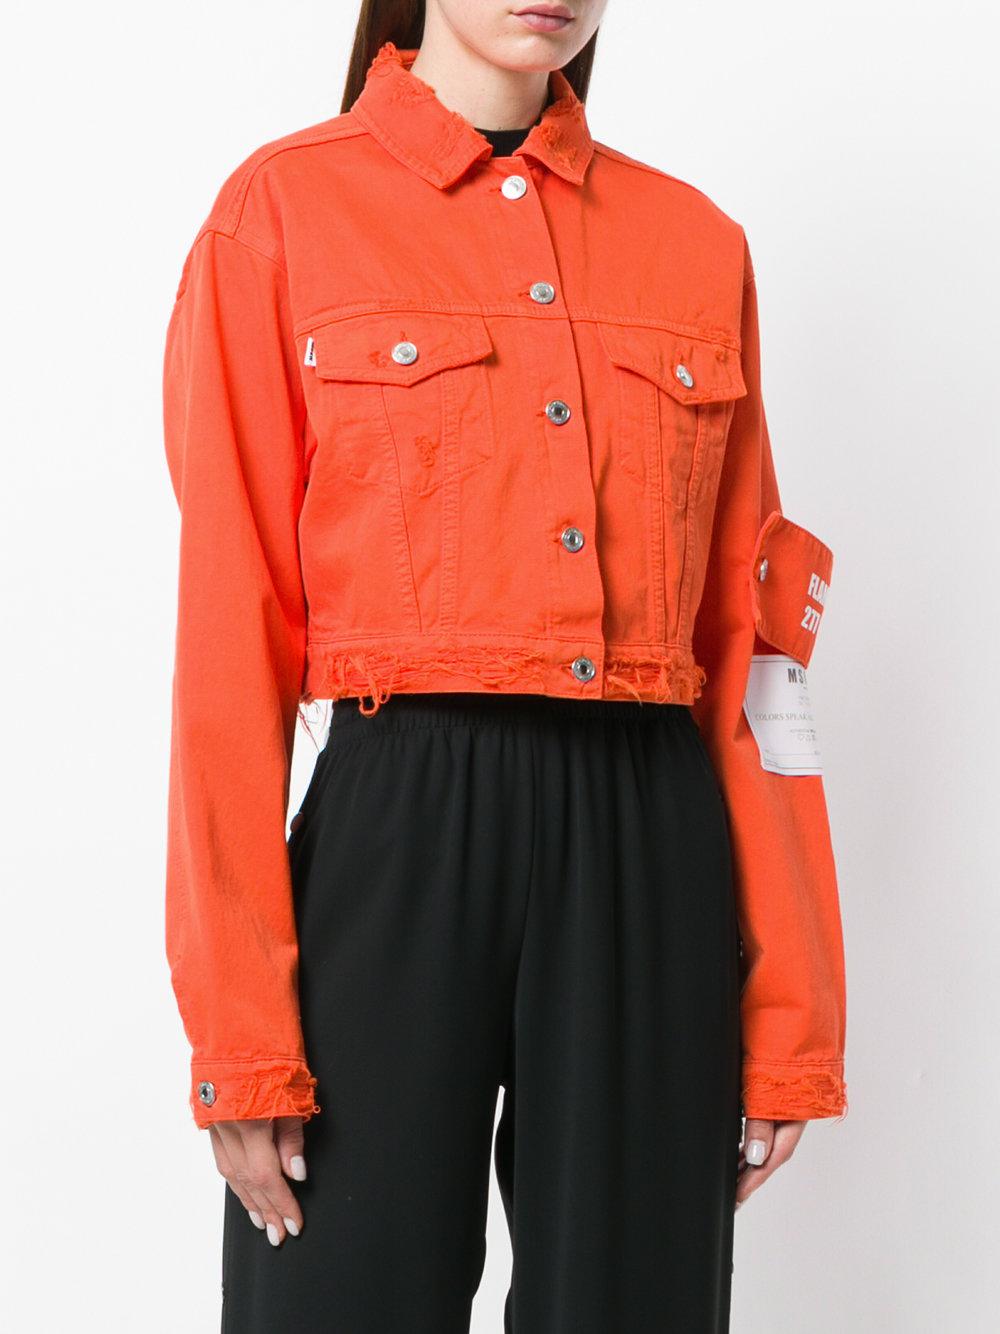 MSGM Cropped Denim Jacket in Yellow & Orange (Orange) - Lyst